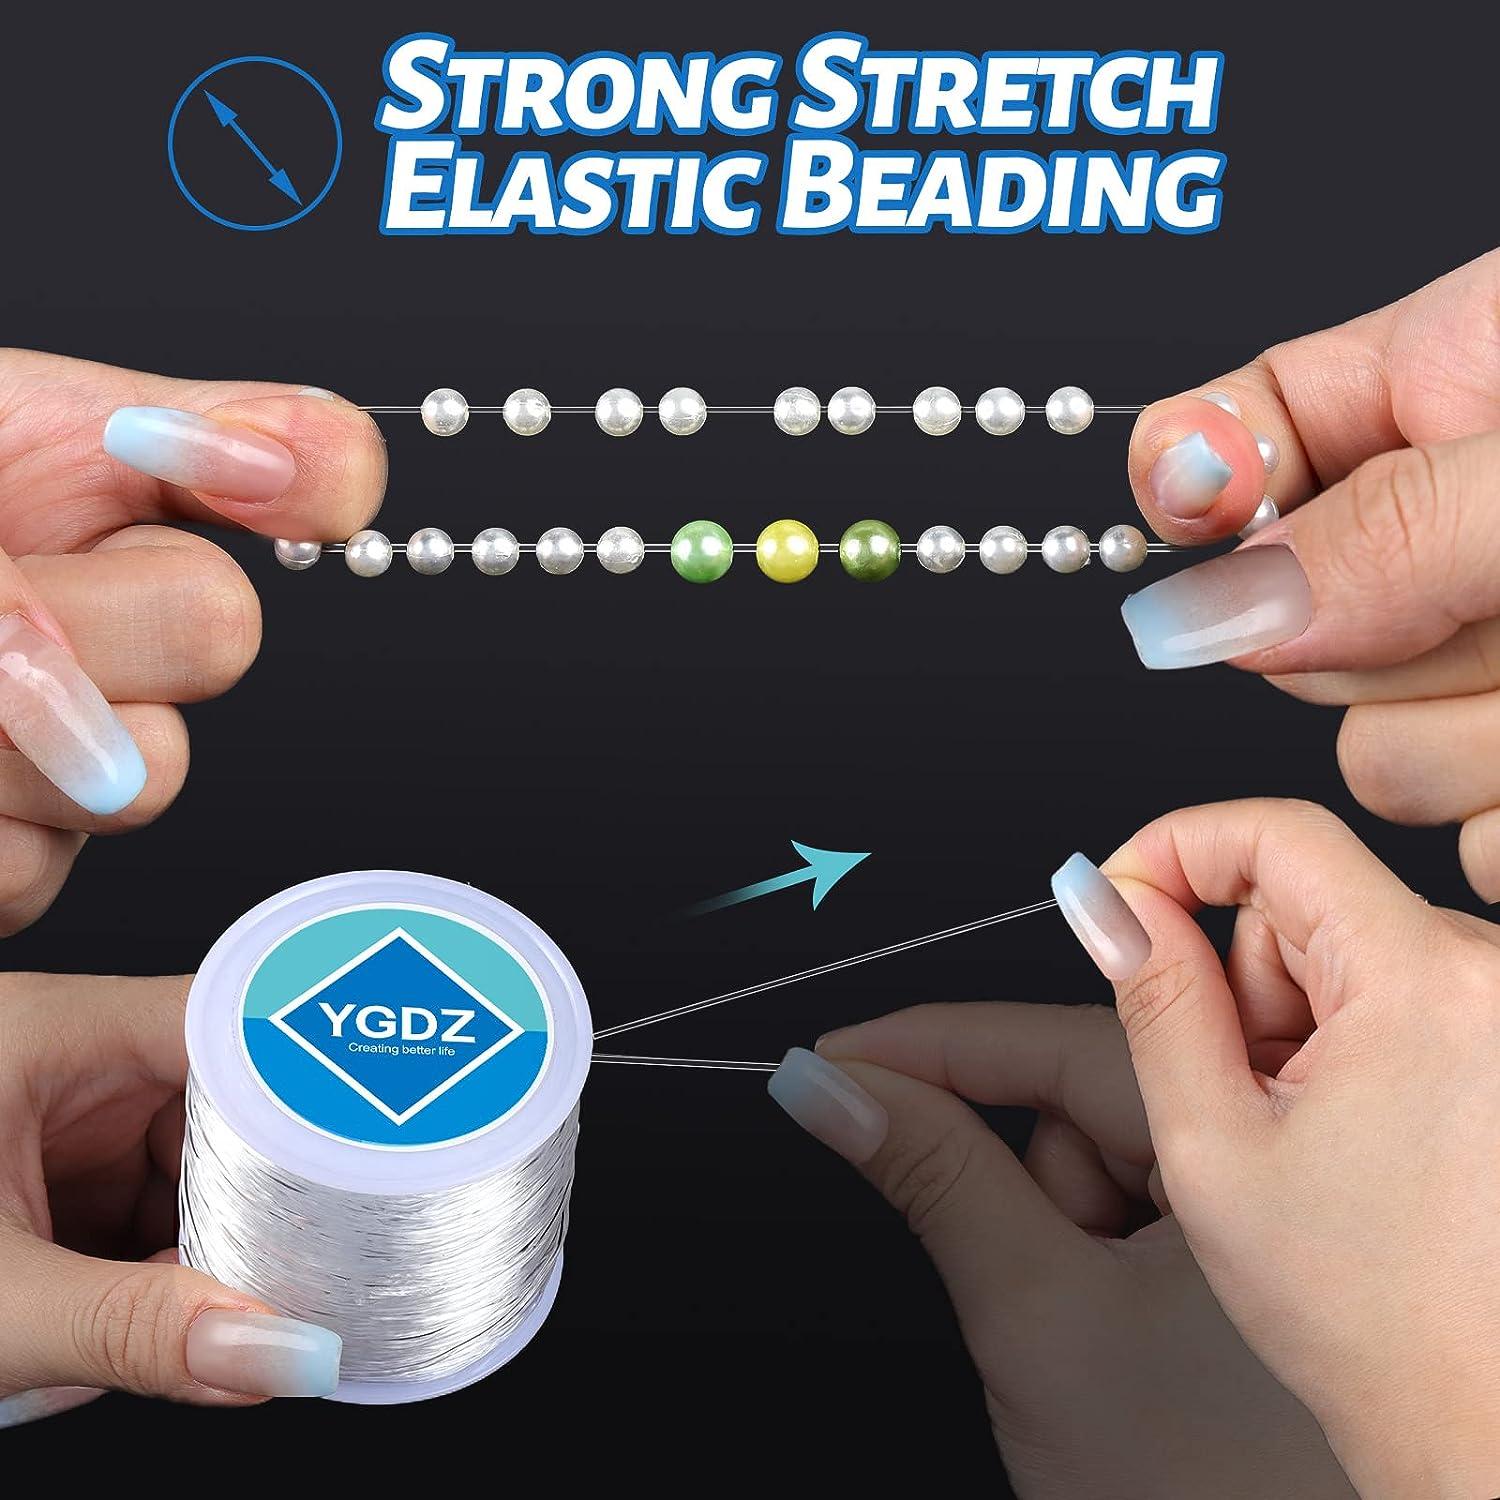 1mm Bracelet String, YGDZ Elastic String Stretchy Bracelet Beading Thread  String for Bracelets Jewelry Making, 1 Roll 100m (1.0mm) 1.0mm 1